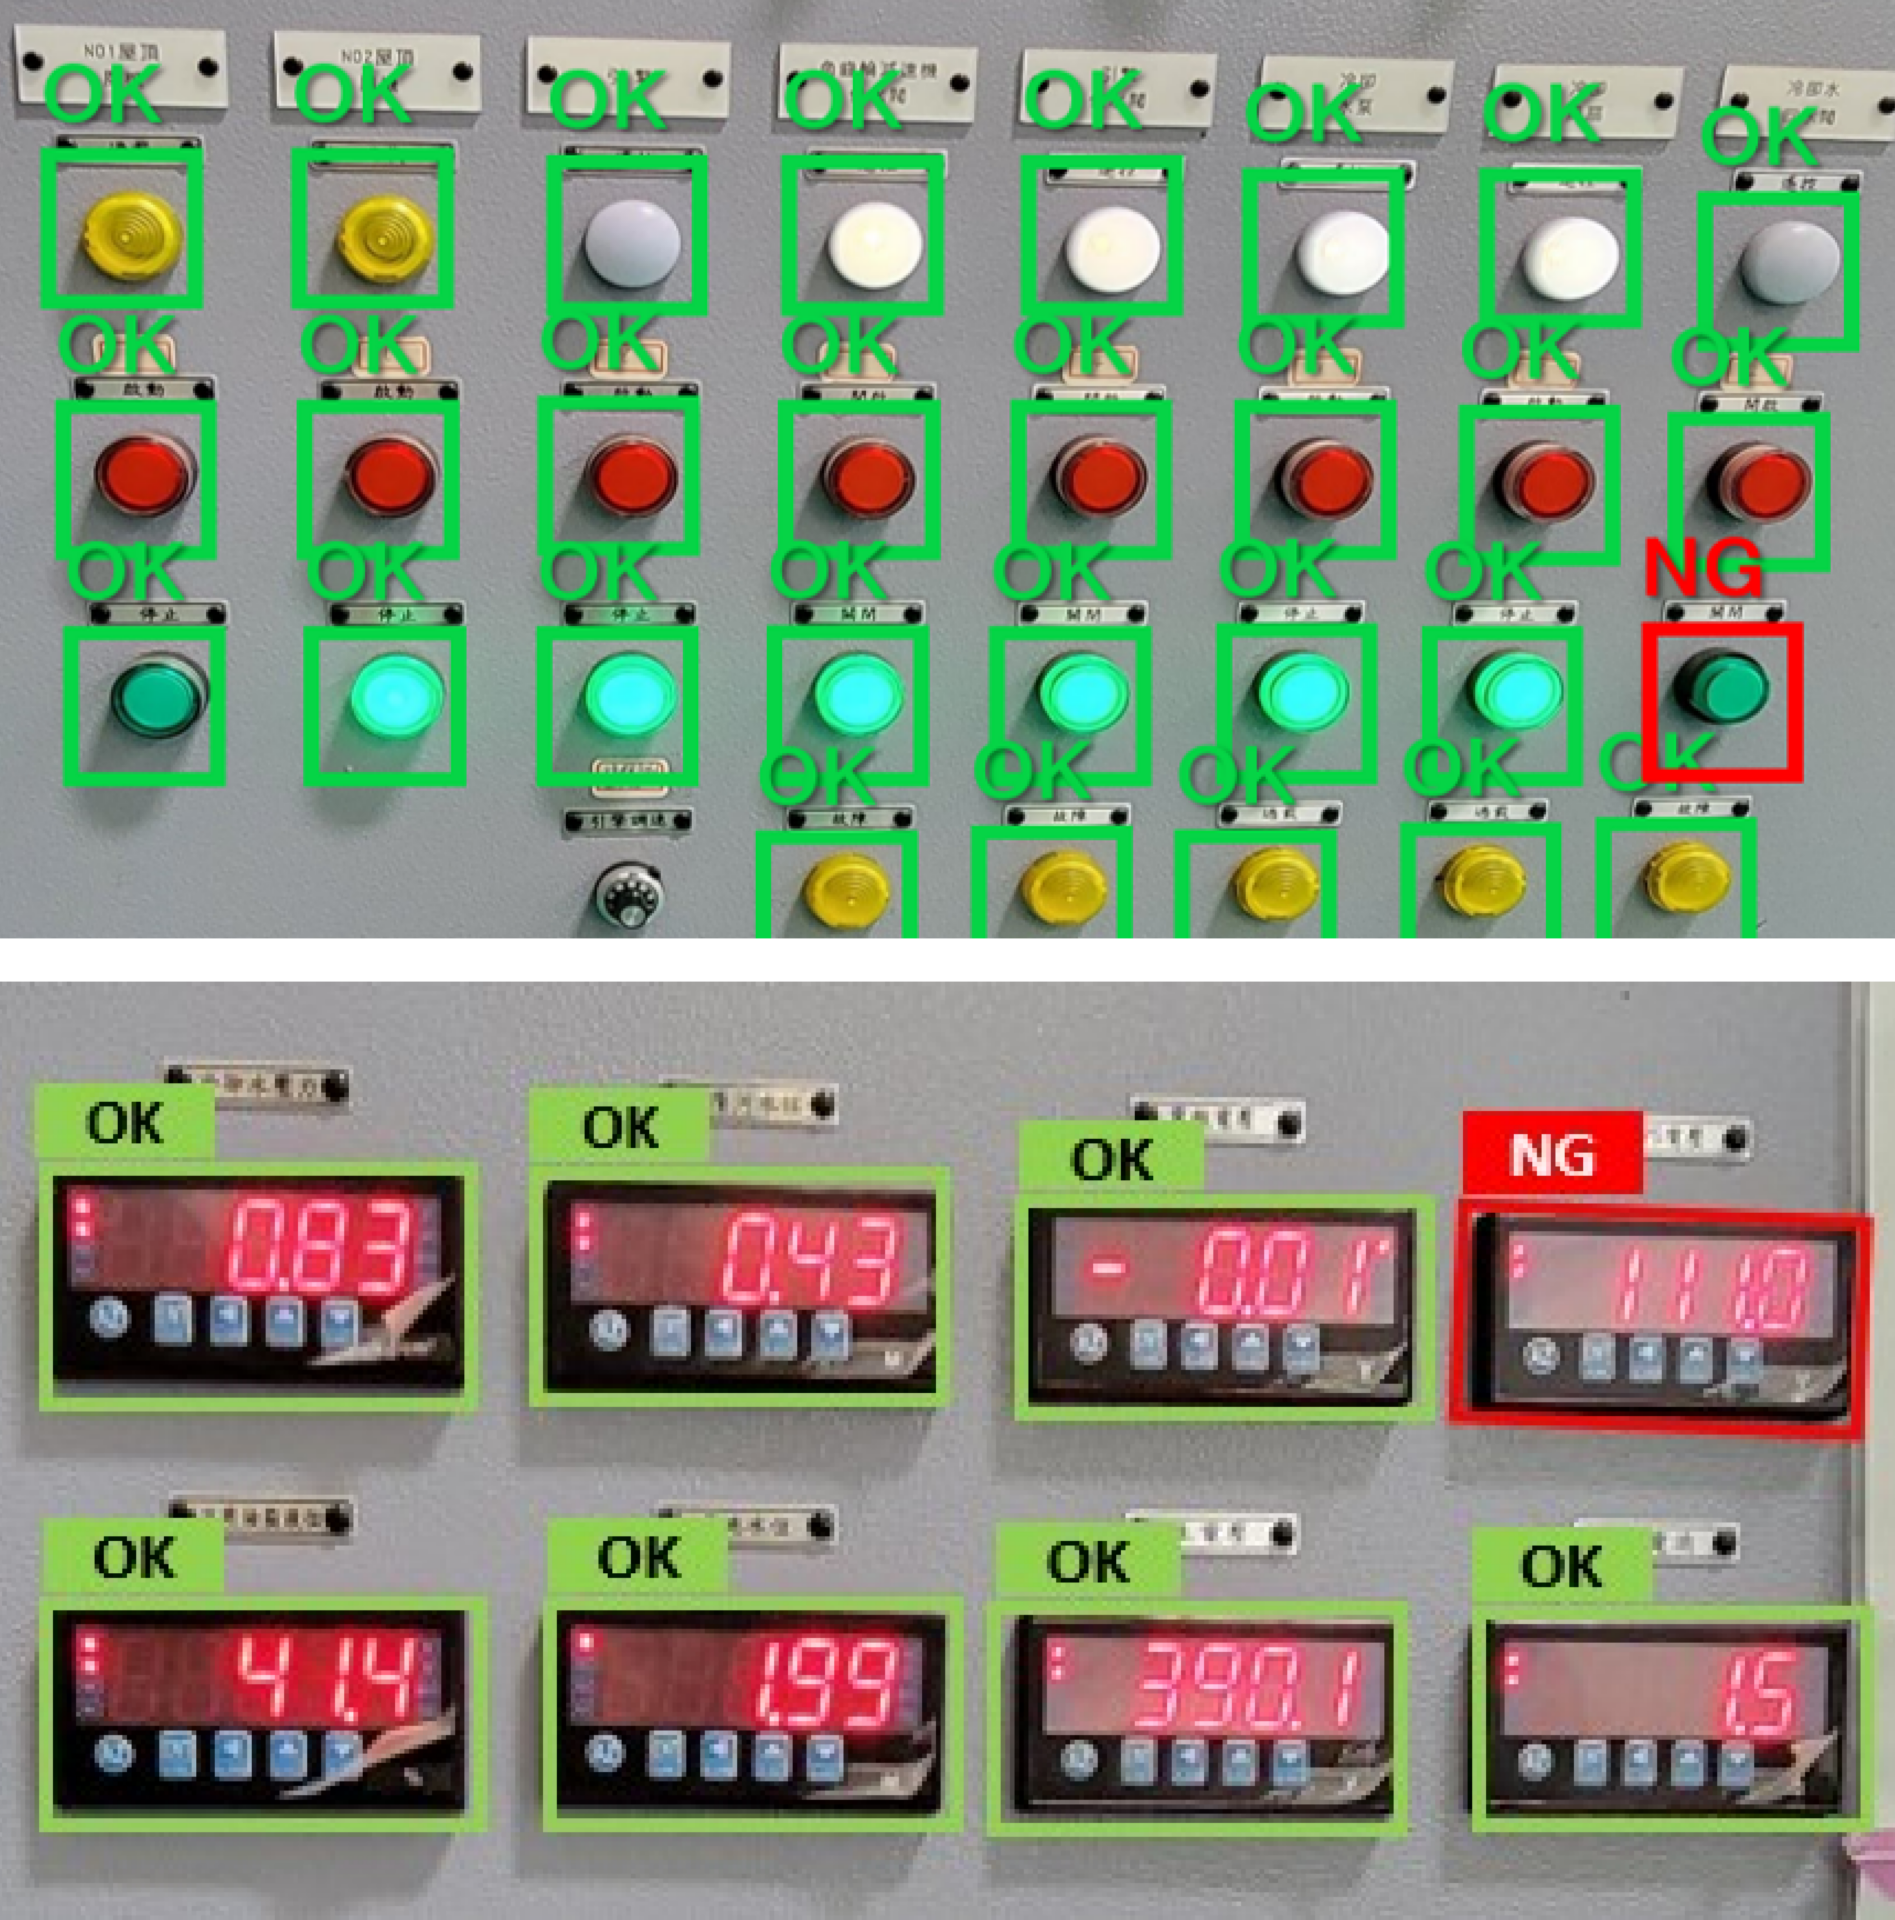 OCR detection of control panel showing lights and digital gauges